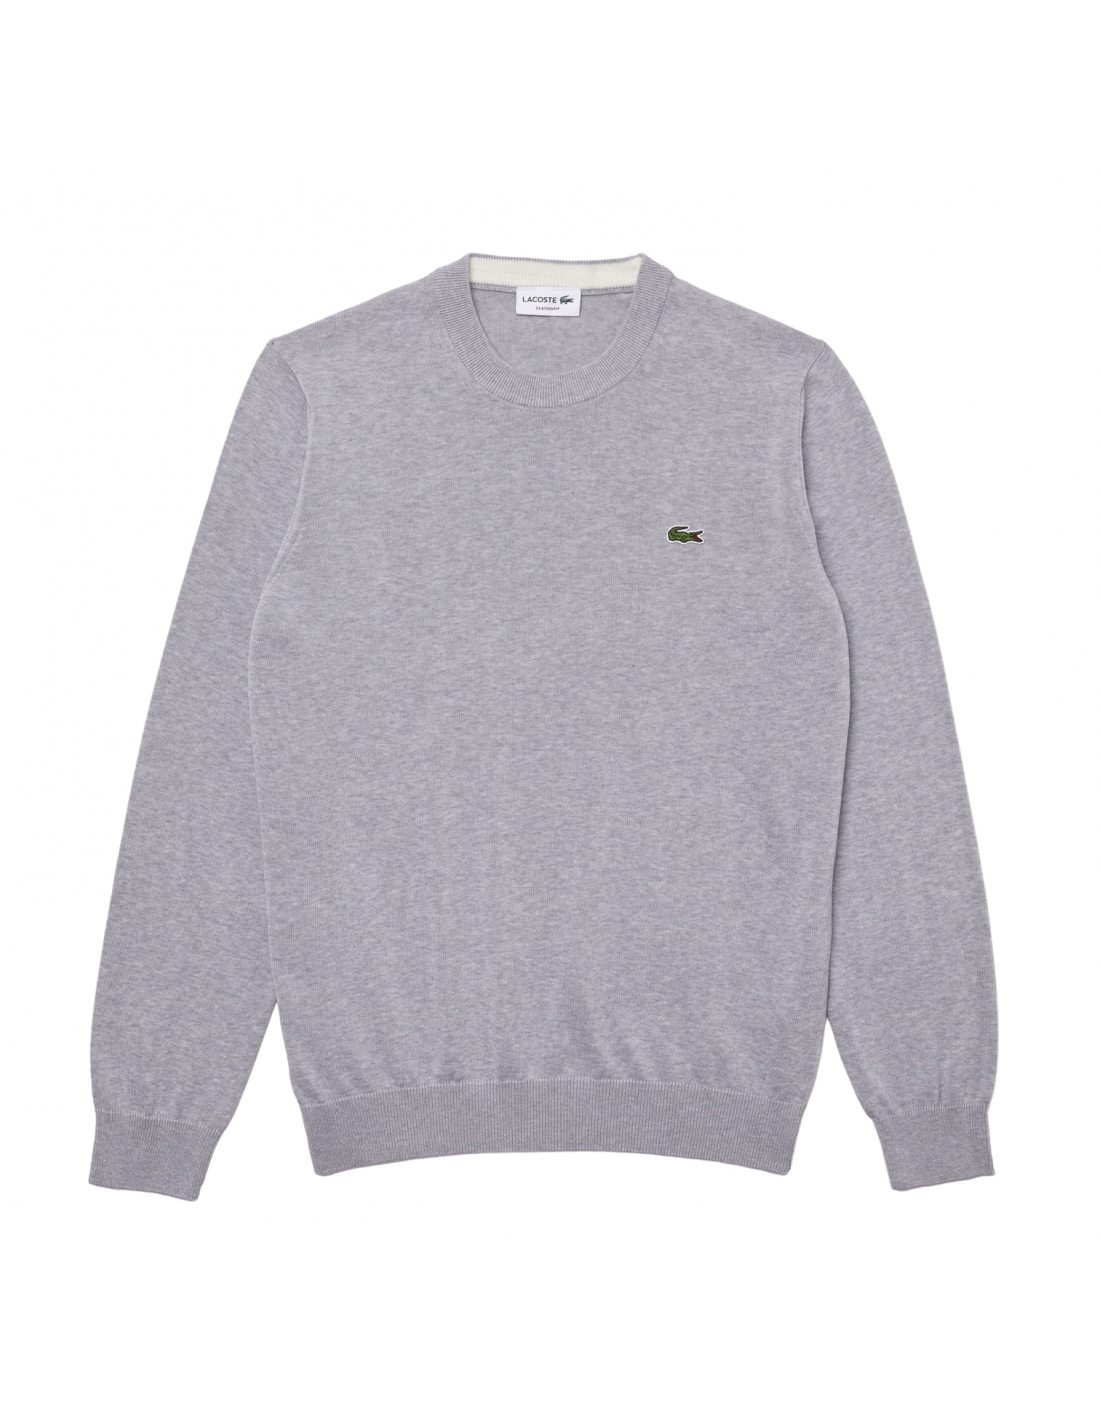 Men's Cotton Neck Lacoste Sweater Grey Chine